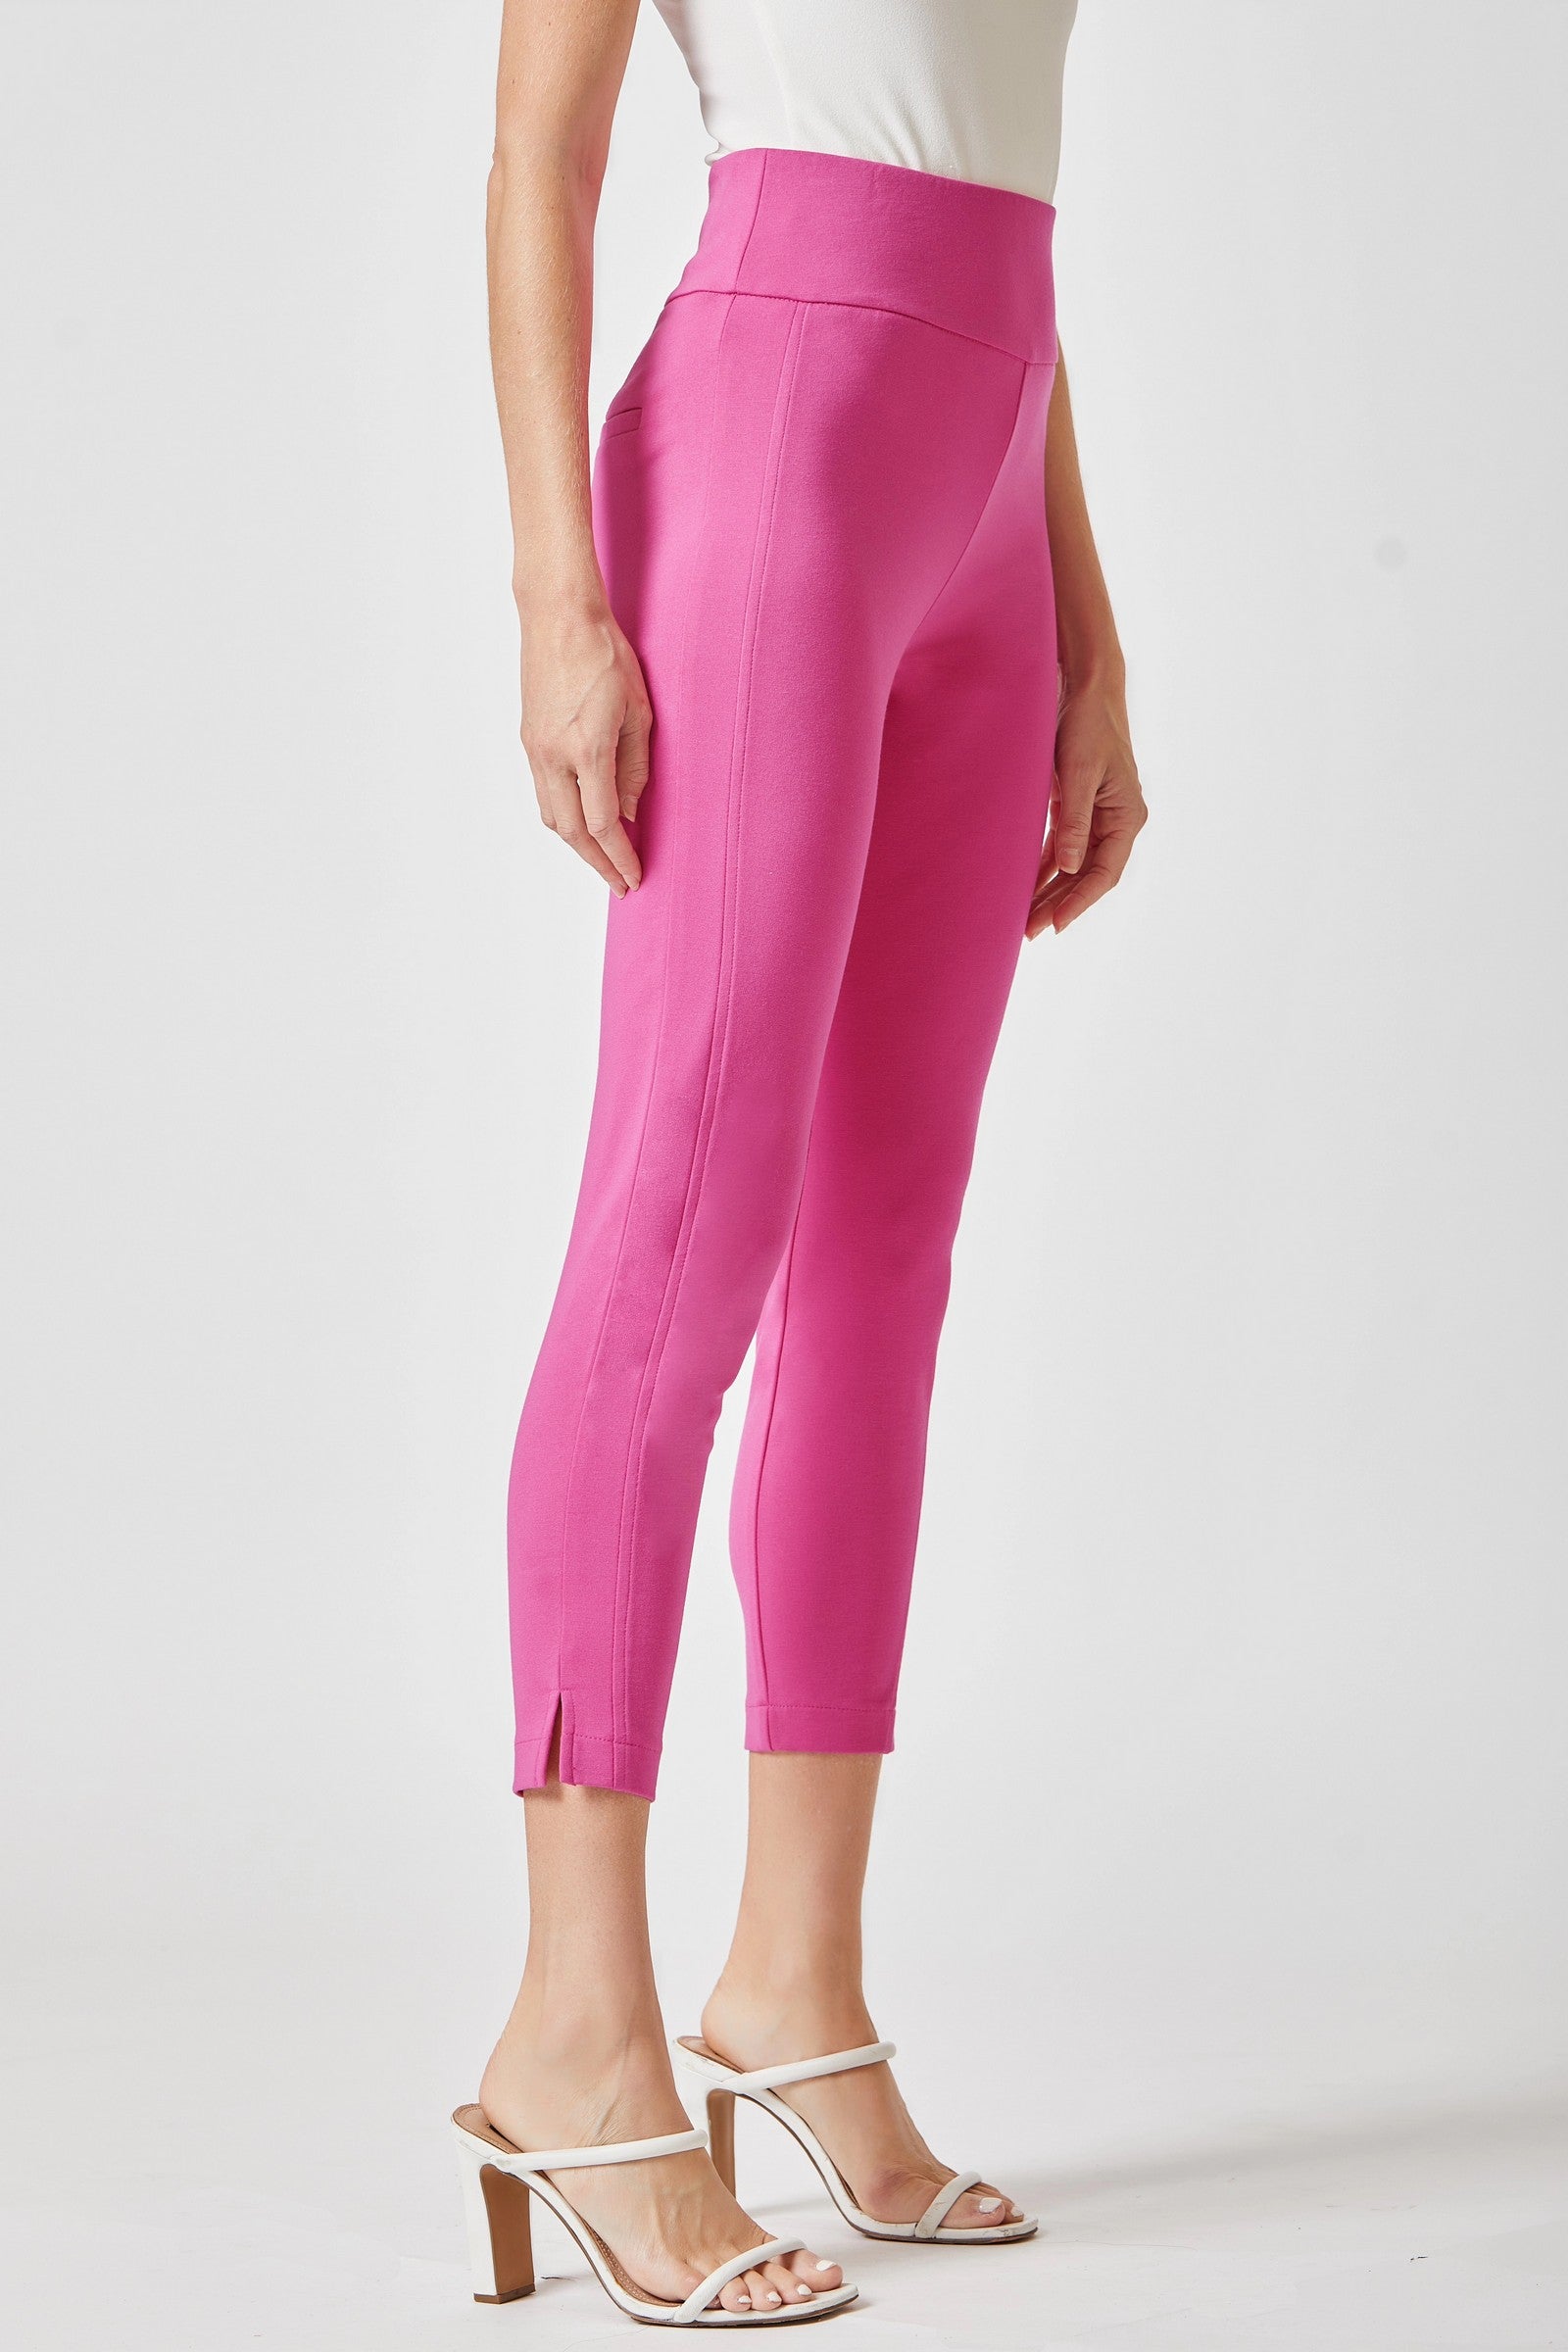 Dear Scarlett Magic Ankle Crop Skinny Pants in Twelve Colors Final Sale Dark Pink Ave Shops